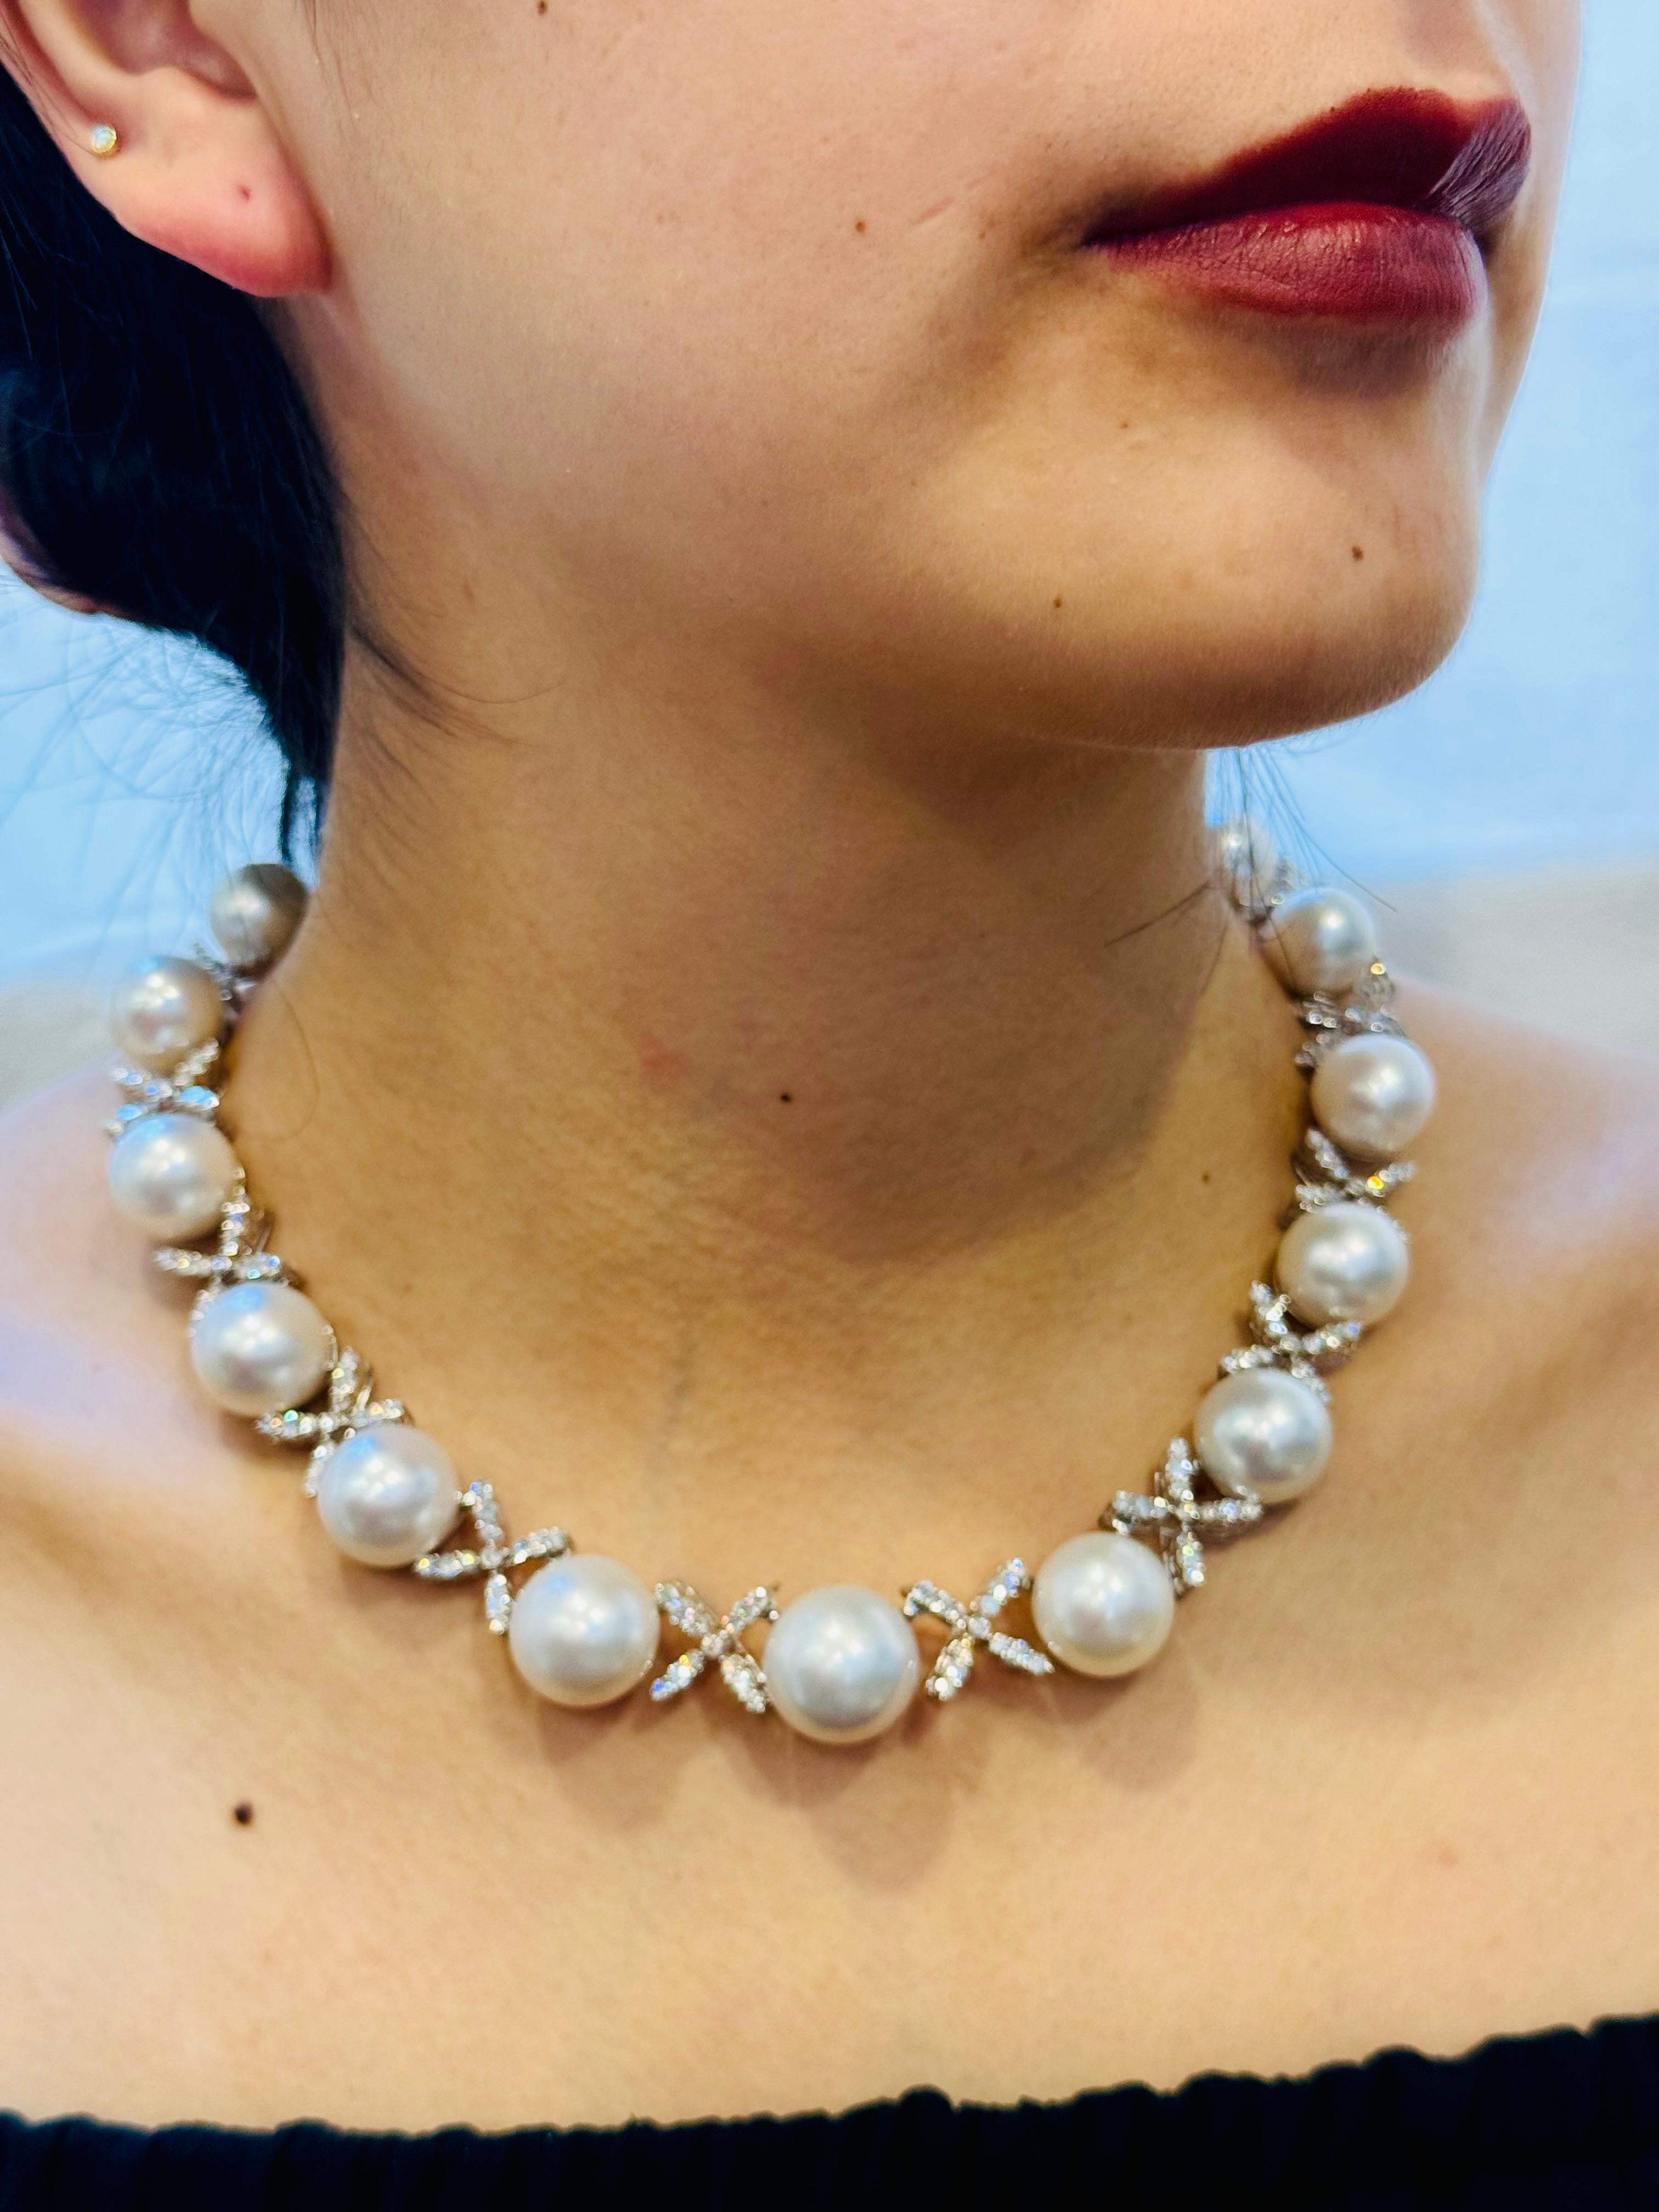 Classic White 12-17 MM  South Sea Cultured Pearl & 20 Ct Diamond Necklace, 17